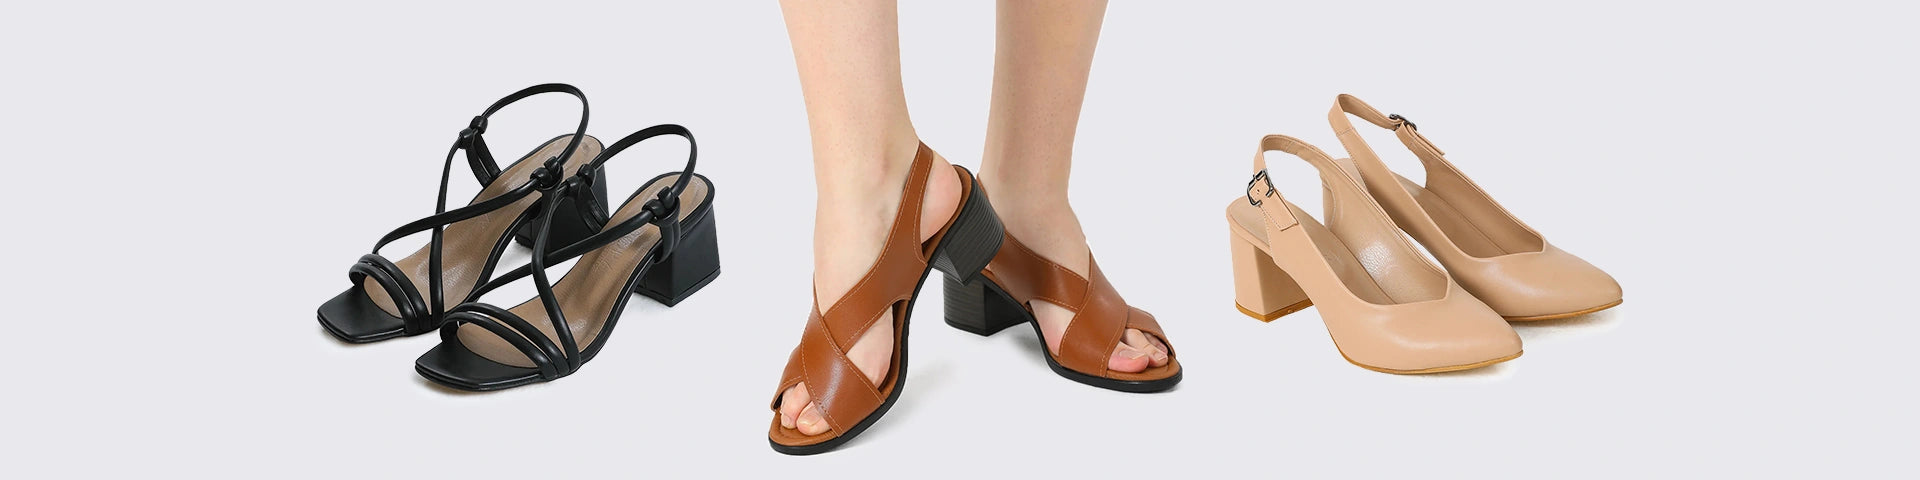 low heel sandal uk